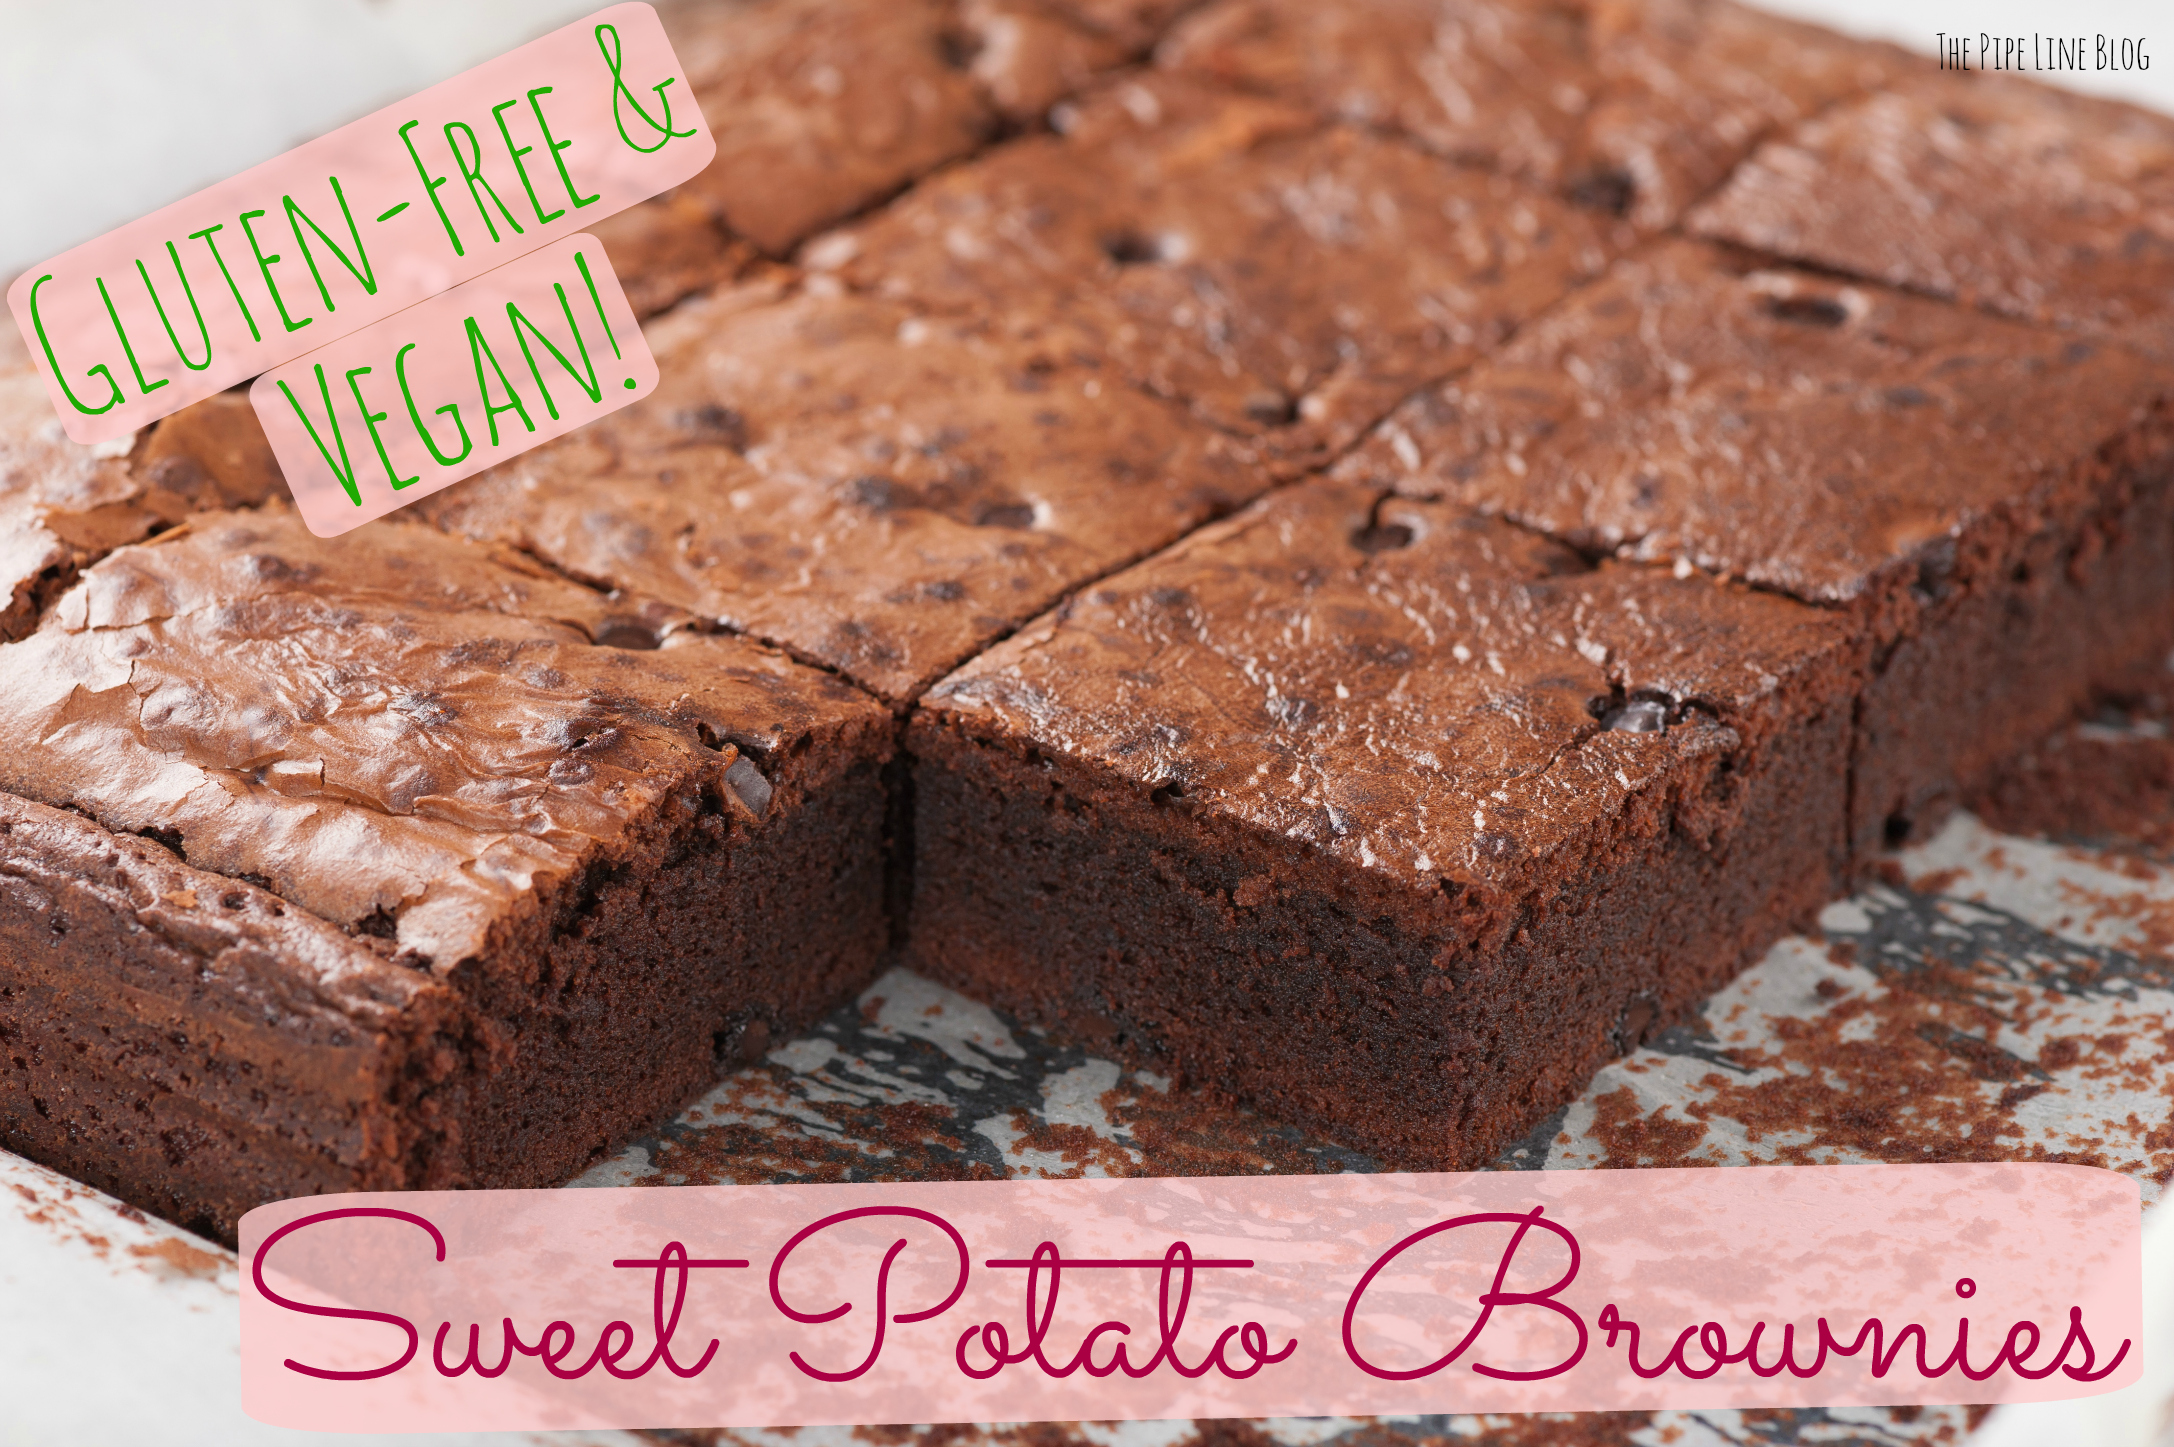 Piping Rock - The Pipe Line - Gluten-Free Sweet Potato Brownies Vegan